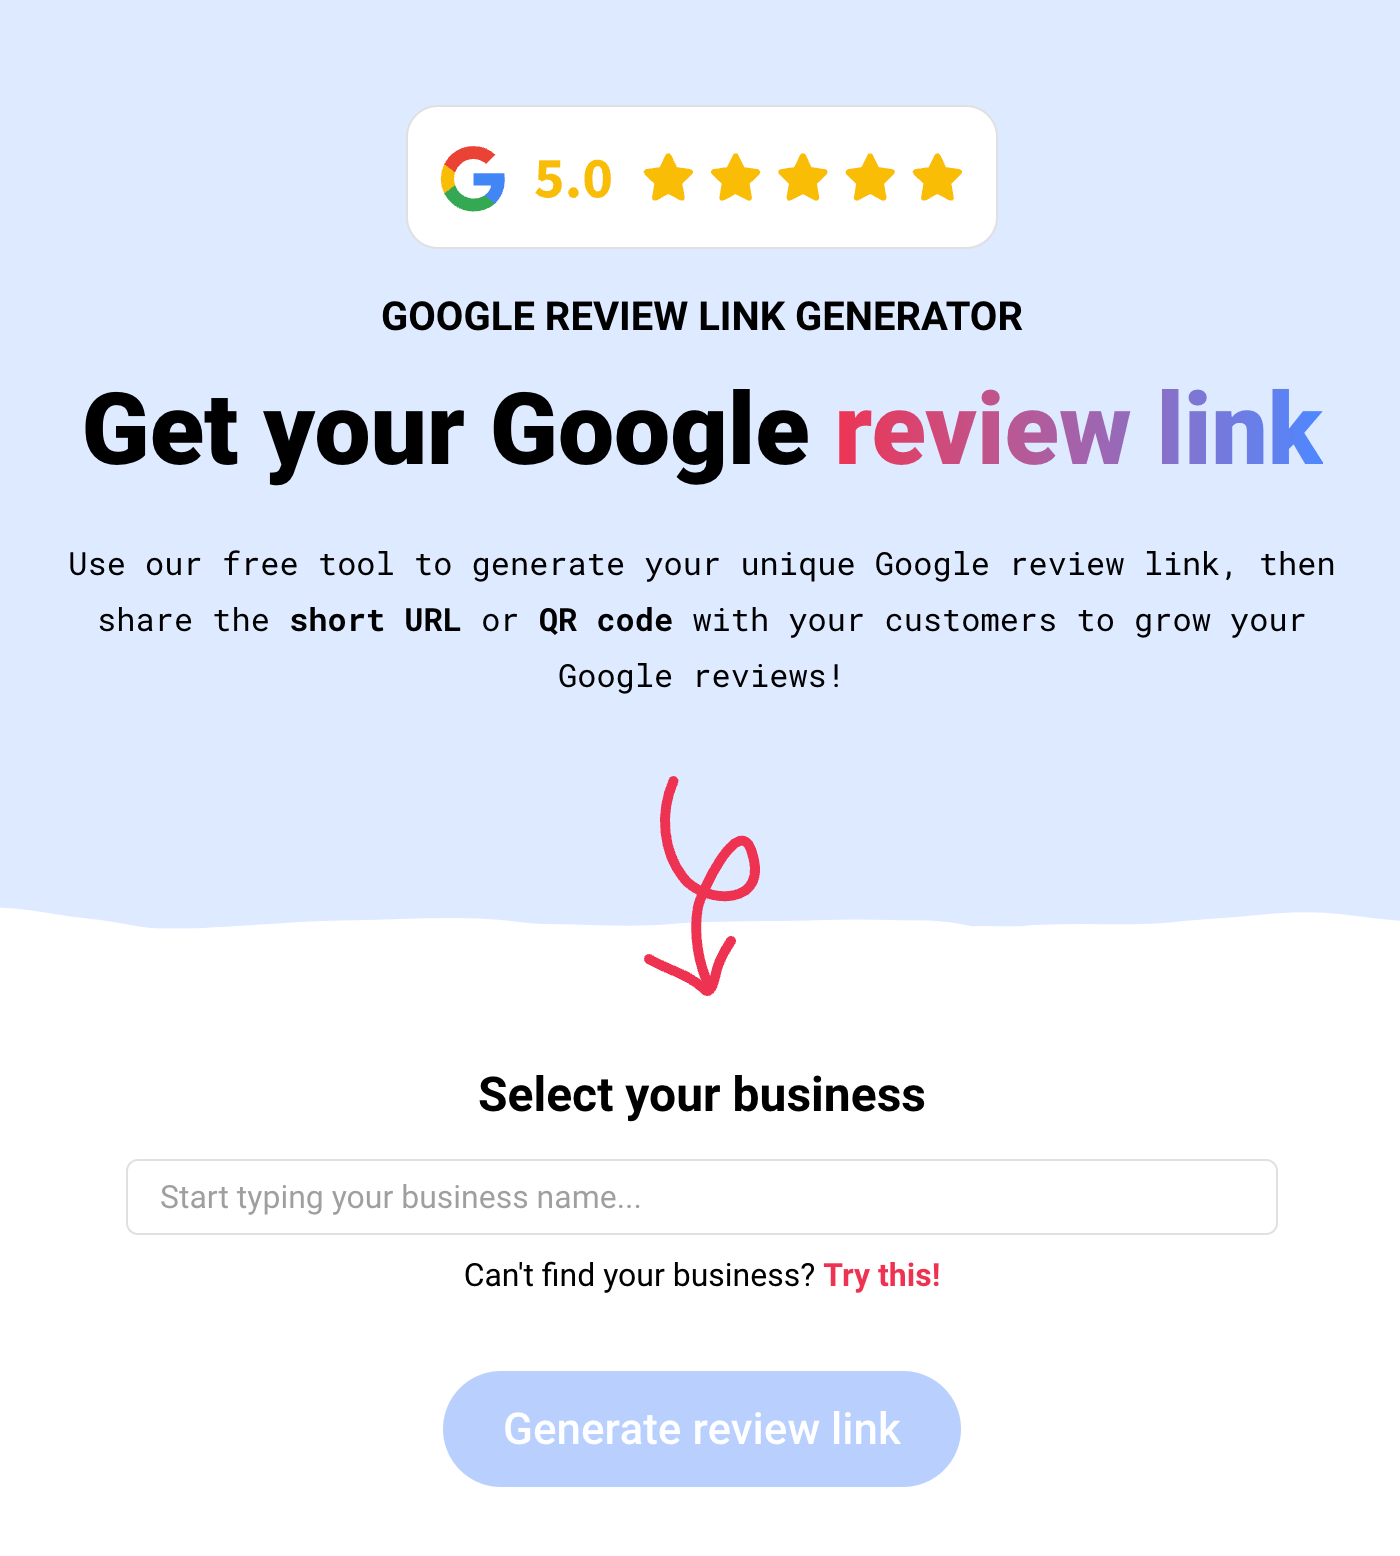 WhiteSpark Google Review Link Generator